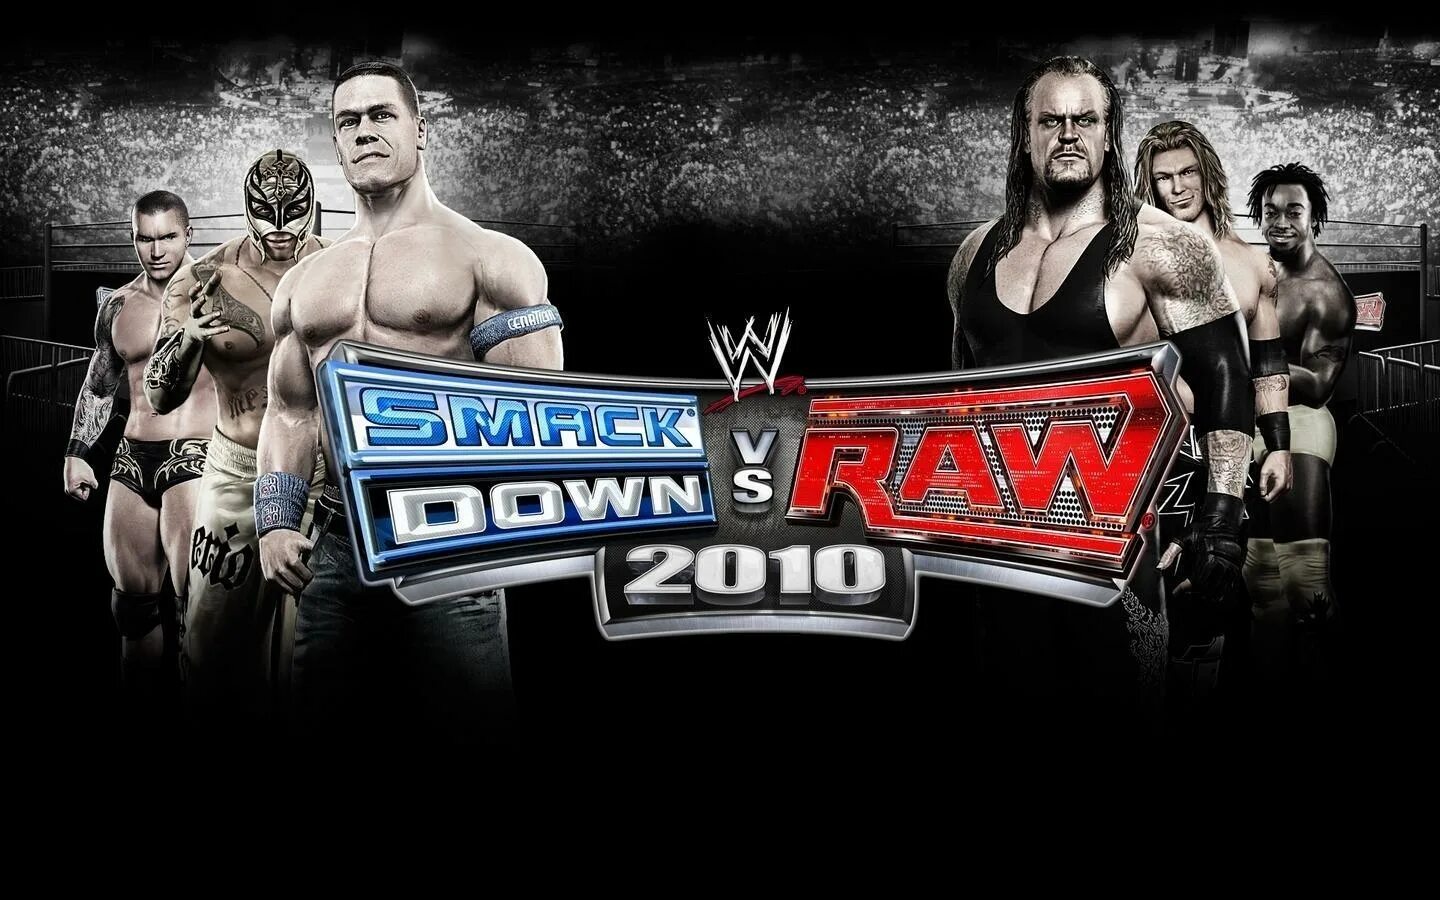 Smack down. ВВЕ 2010. WWE SVR 2010. WWE SMACKDOWN. WWE SMACKDOWN 2010.